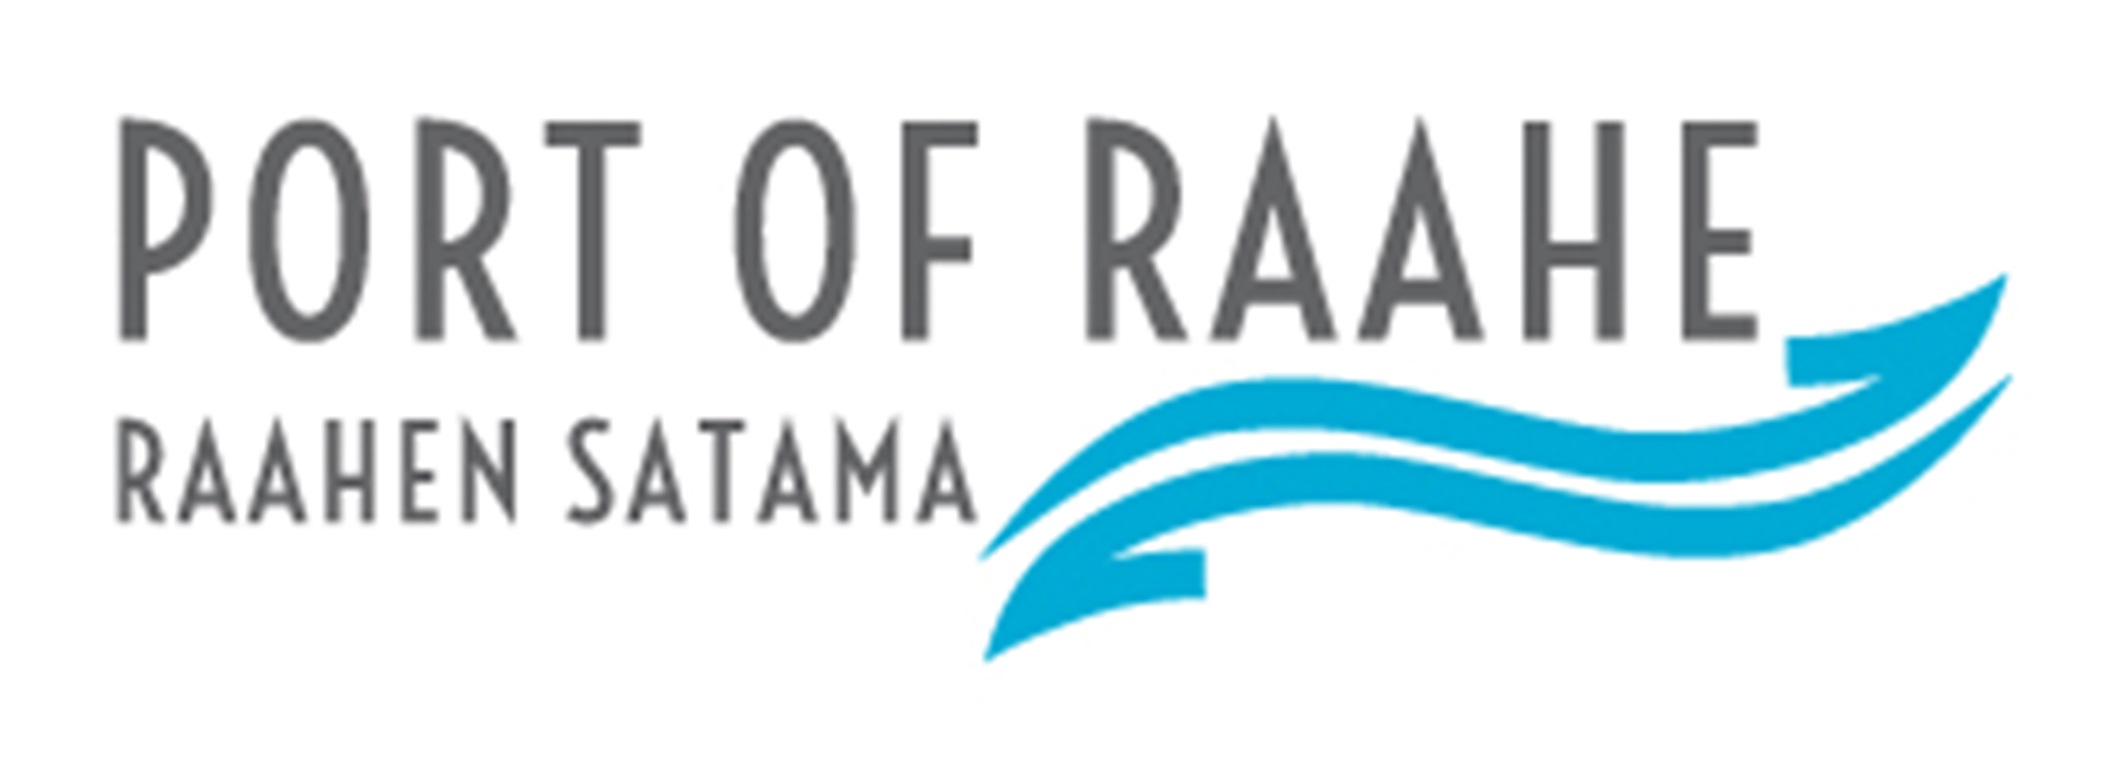 Raahe - logo